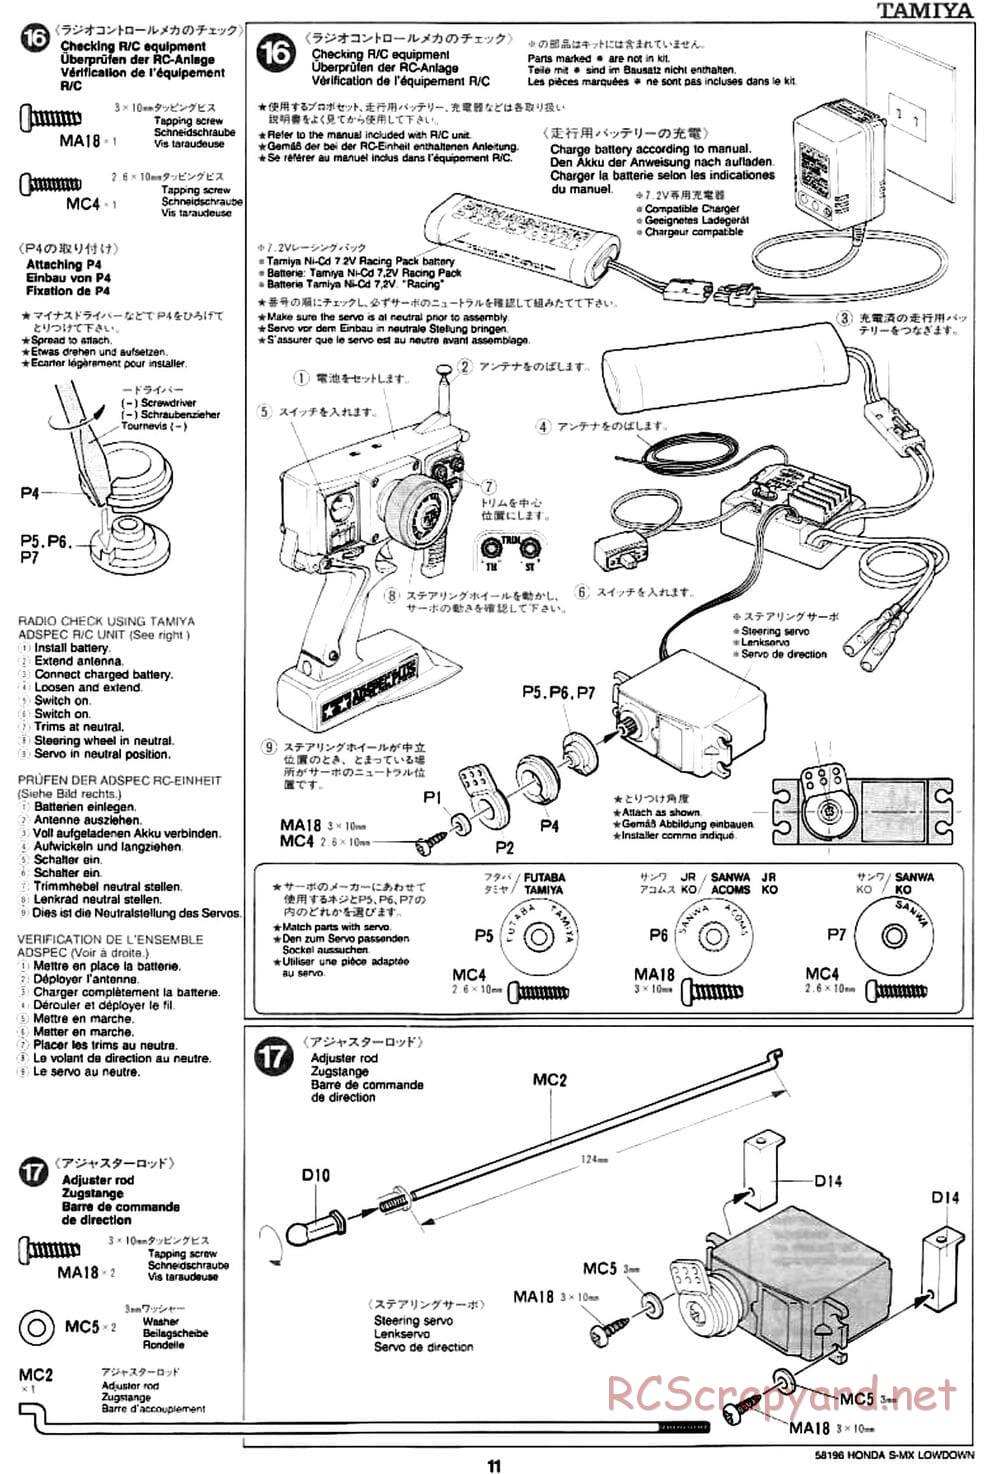 Tamiya - Honda S-MX Lowdown - M01 Chassis - Manual - Page 11